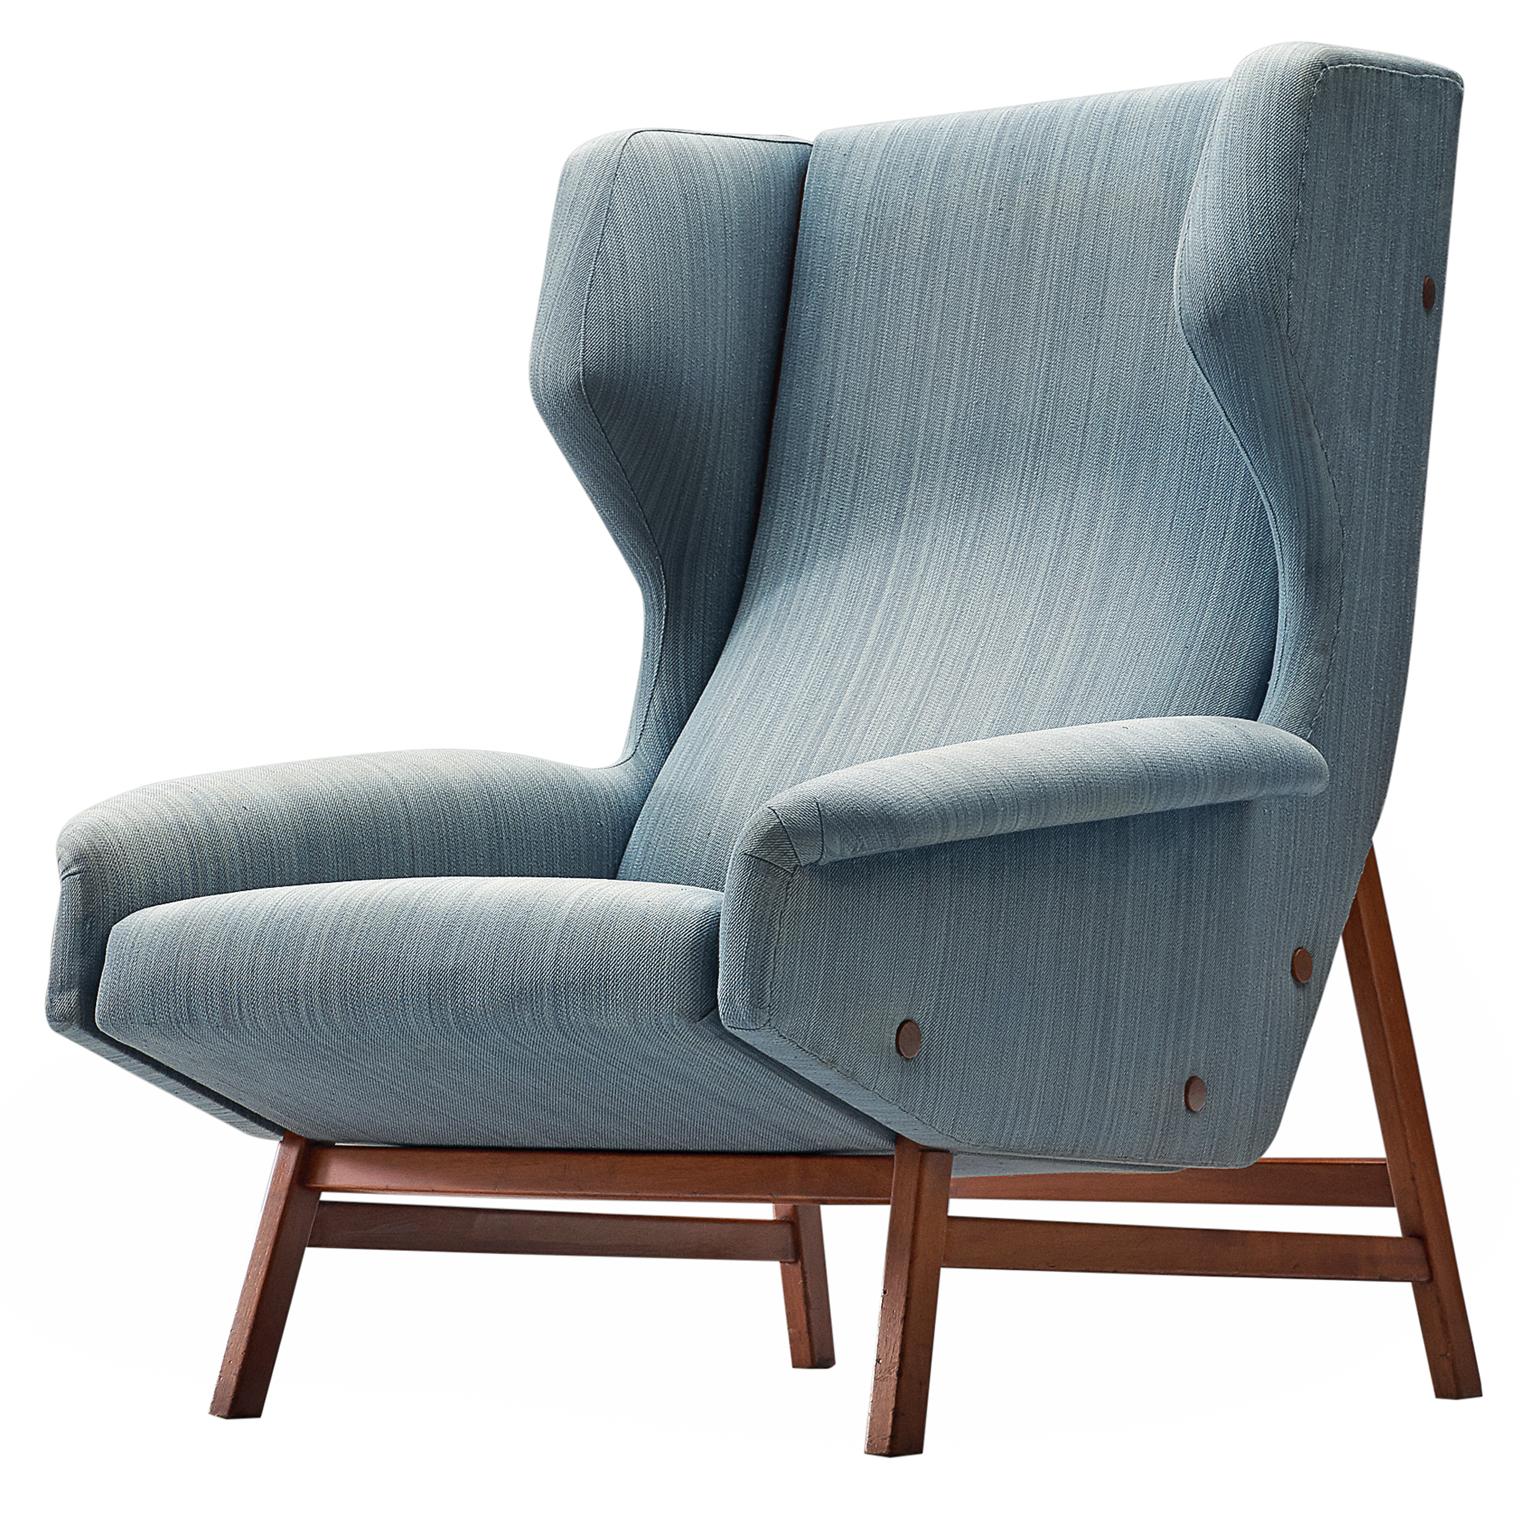 Gianfranco Frattini Lounge Chair for Cassina